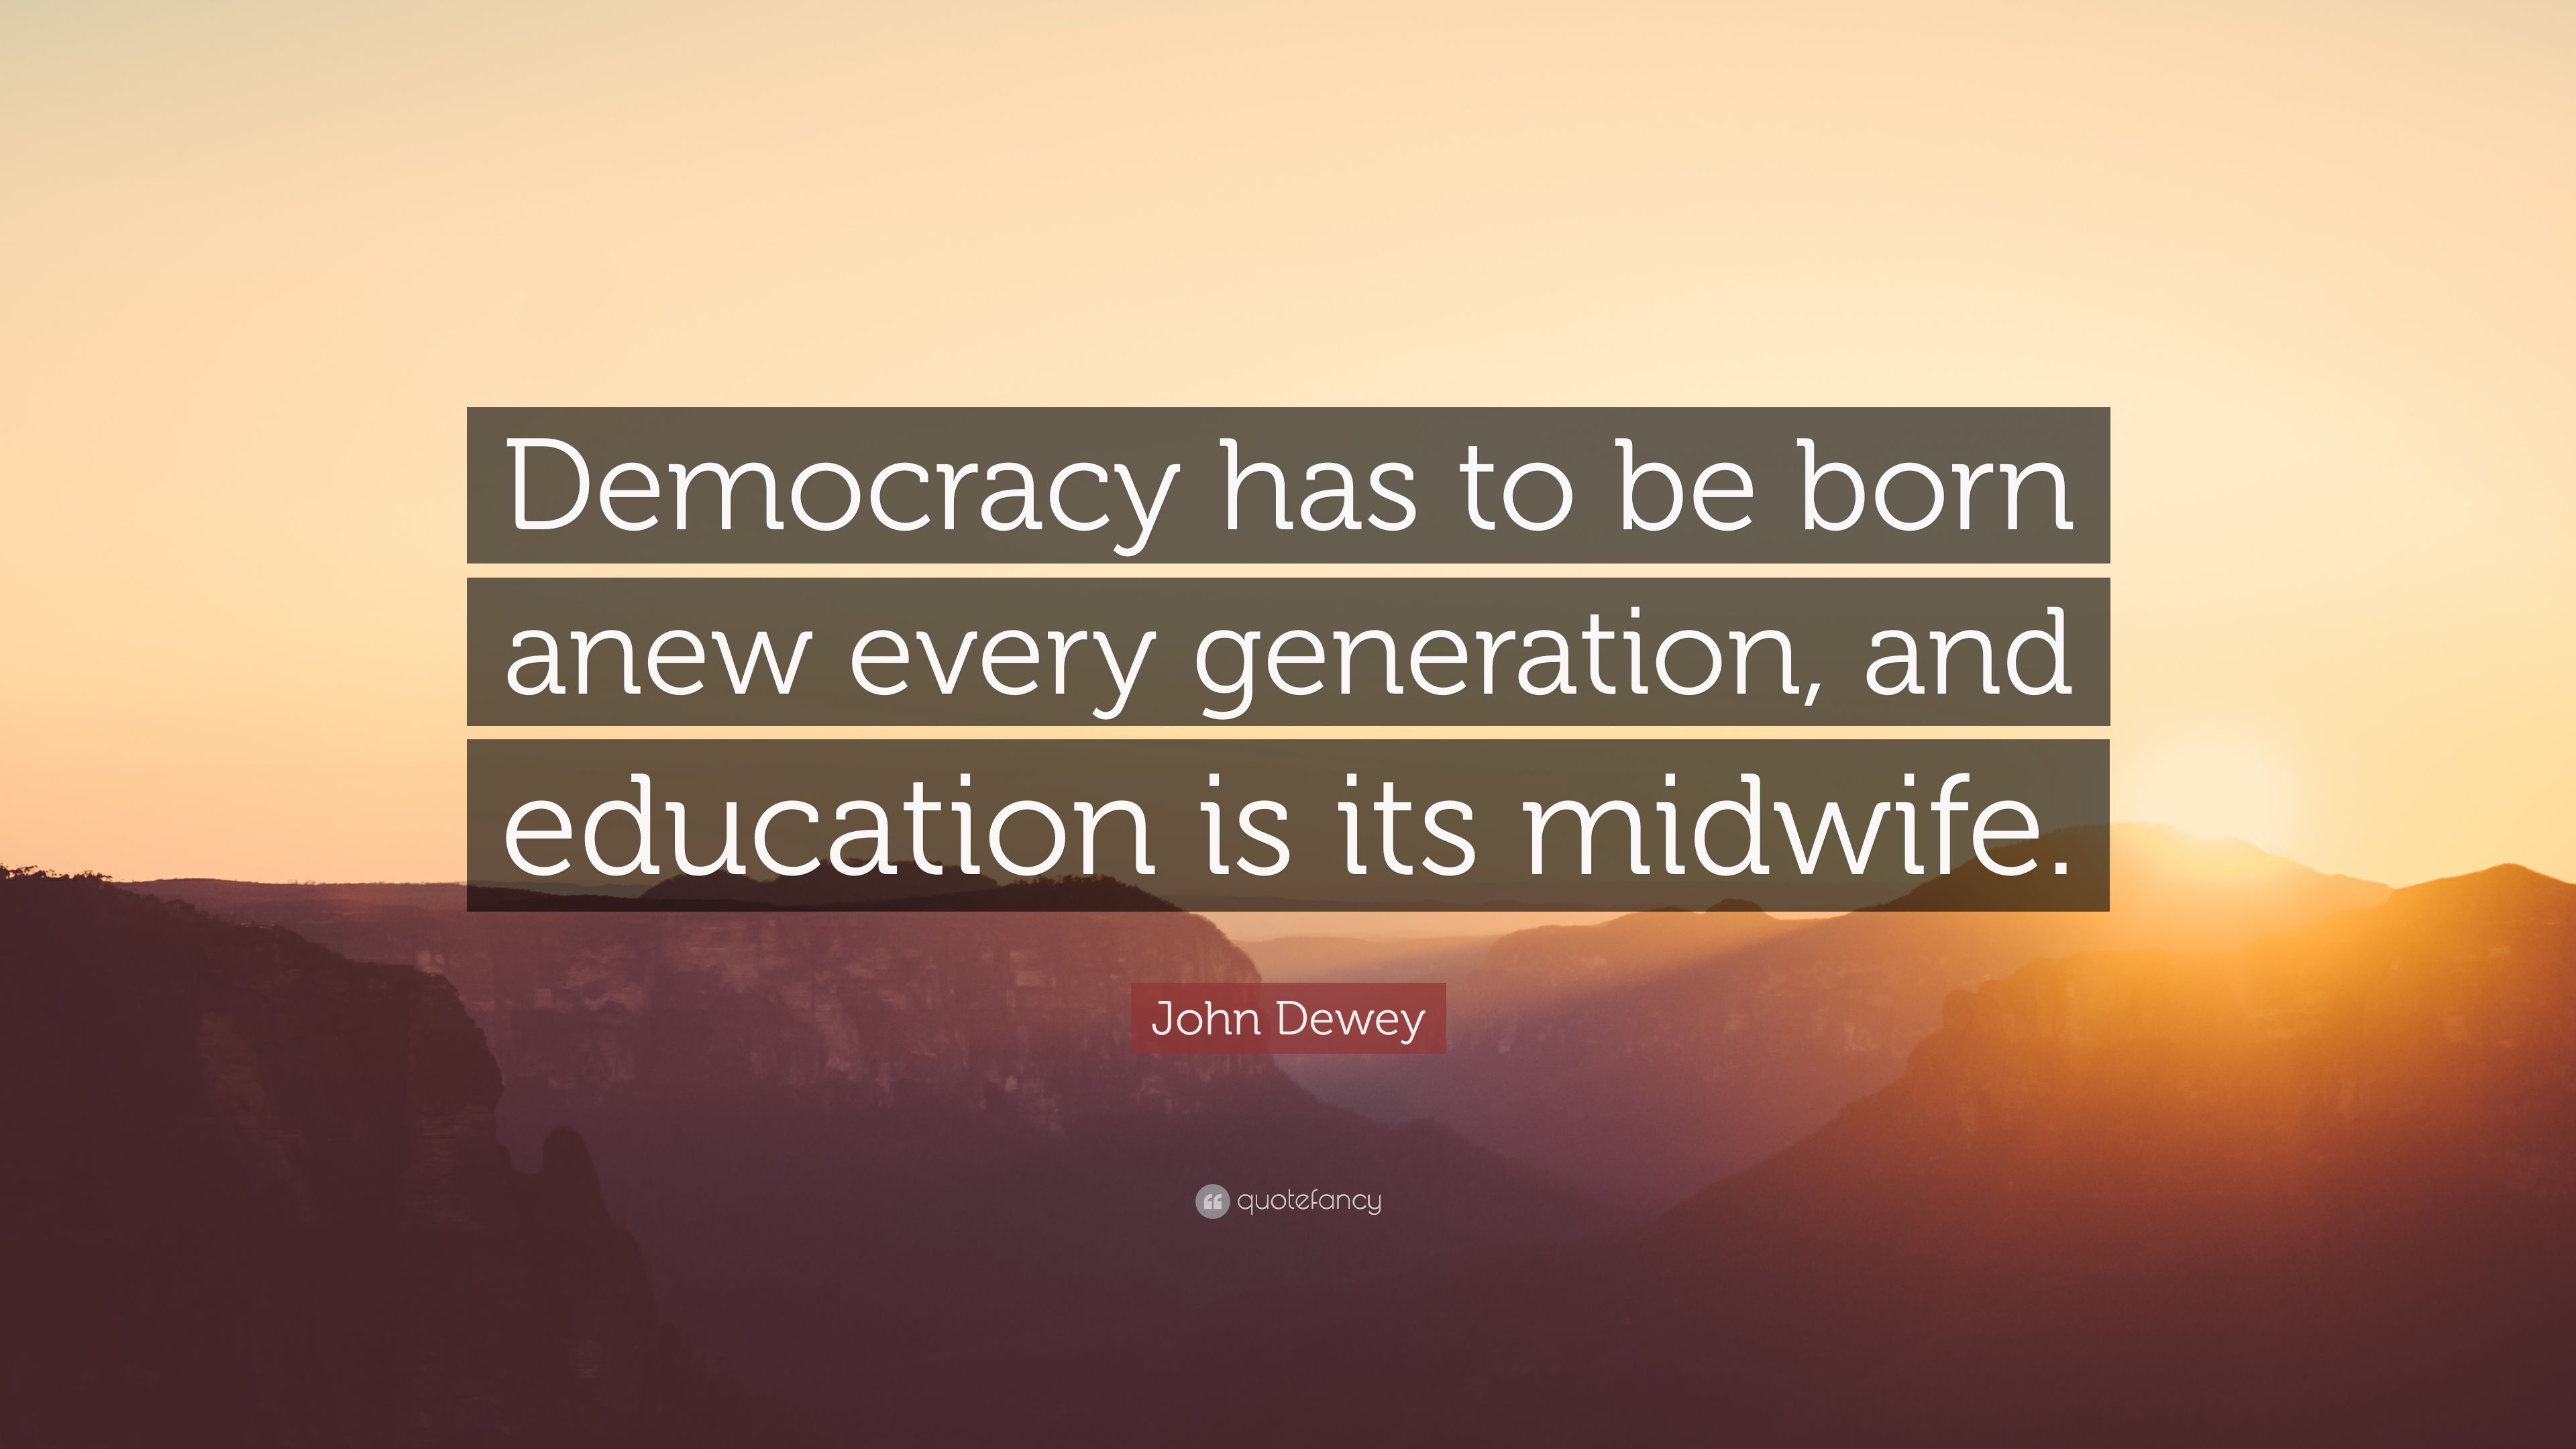 John Dewey Quote: “Democracy has to be born anew every generation